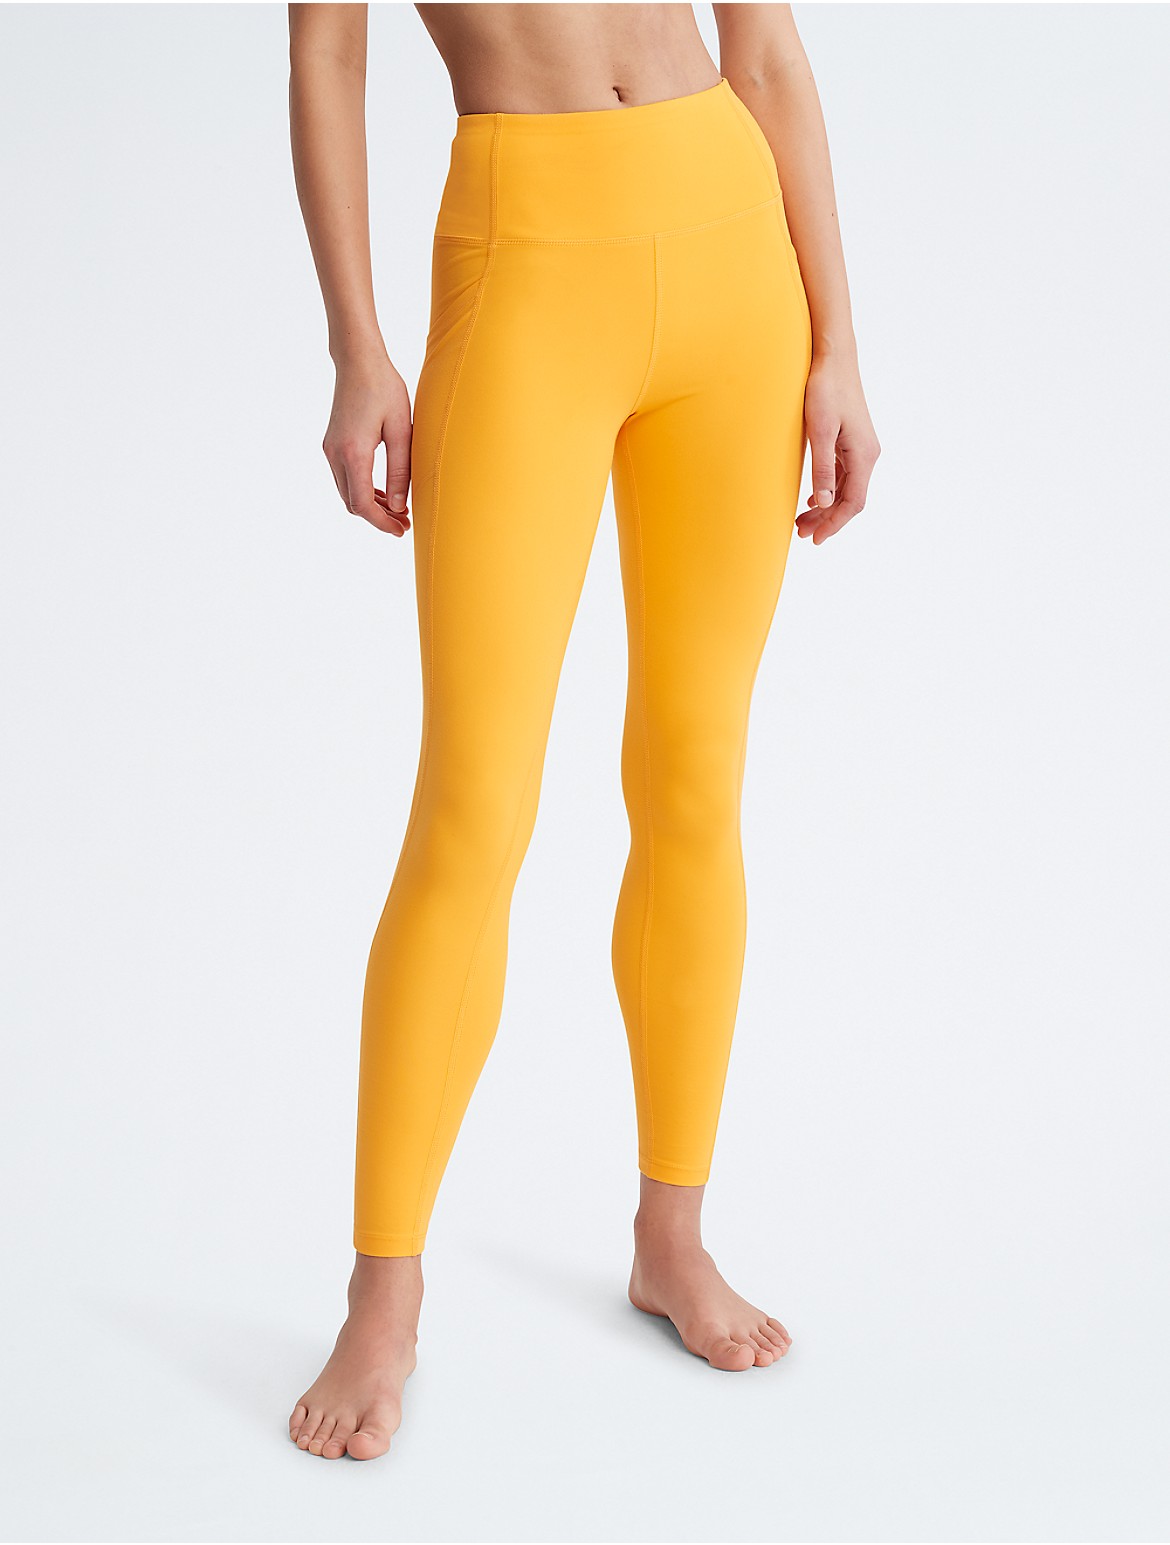 Calvin Klein Women's Performance Embrace Super High Waist Leggings - Orange - XS